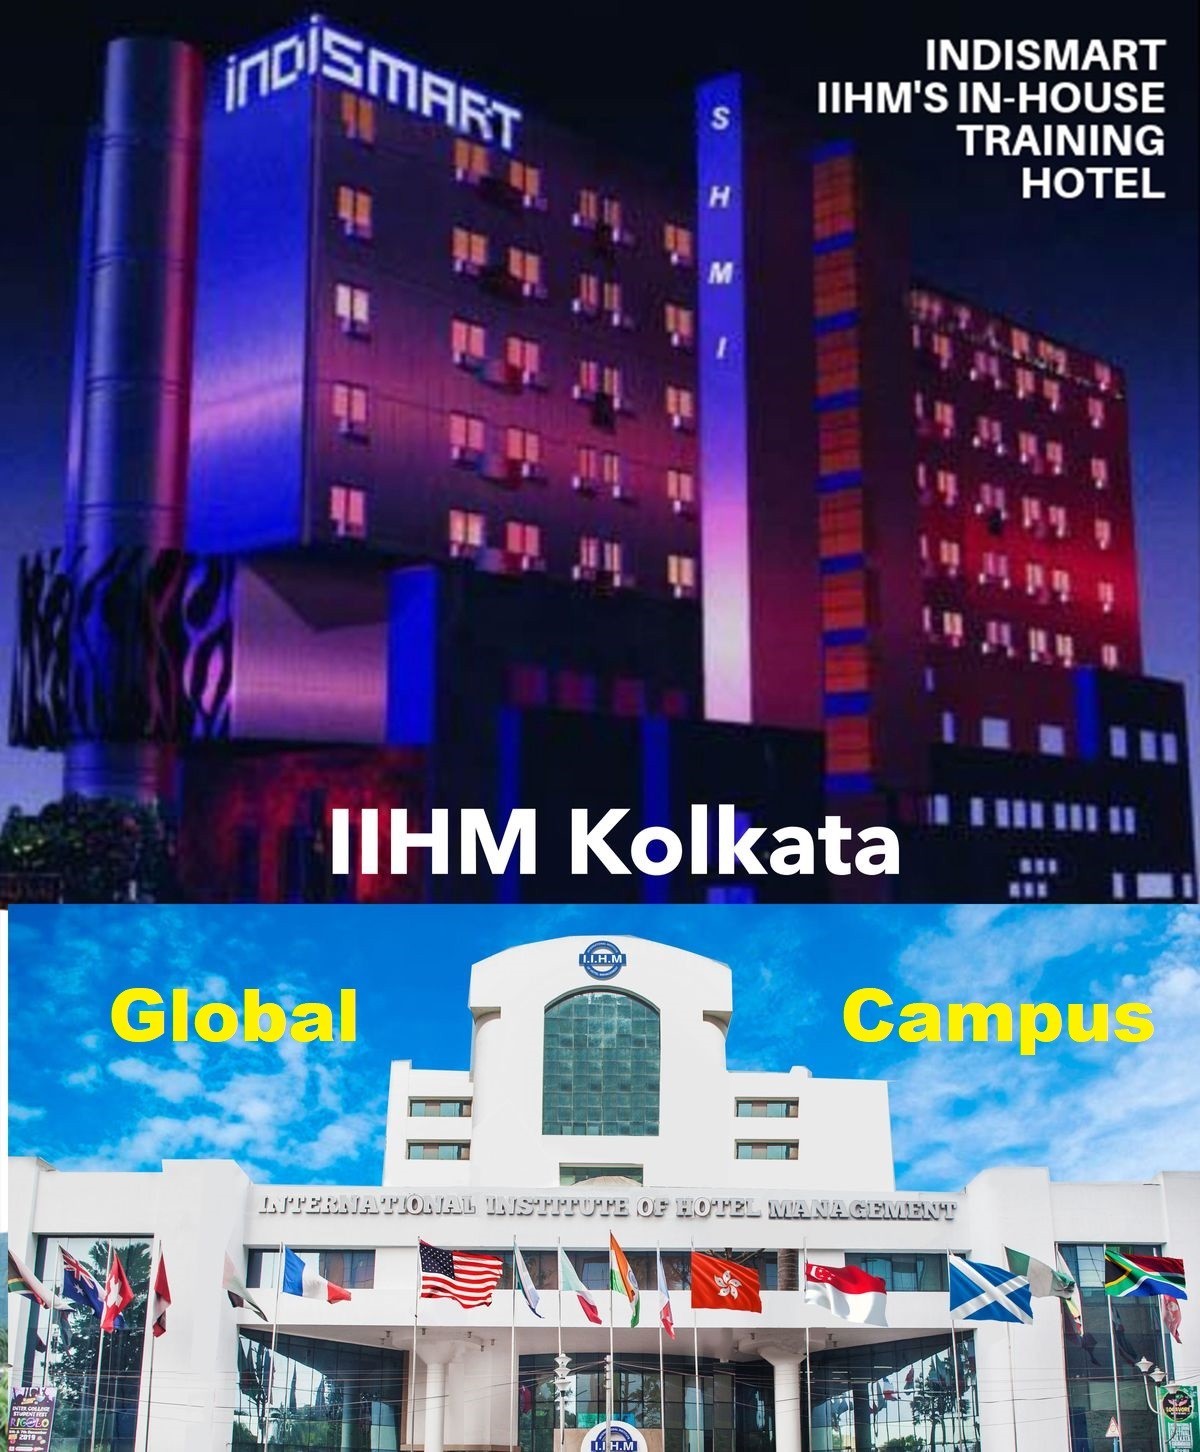 IIHM Hotel Management College in Kolkata